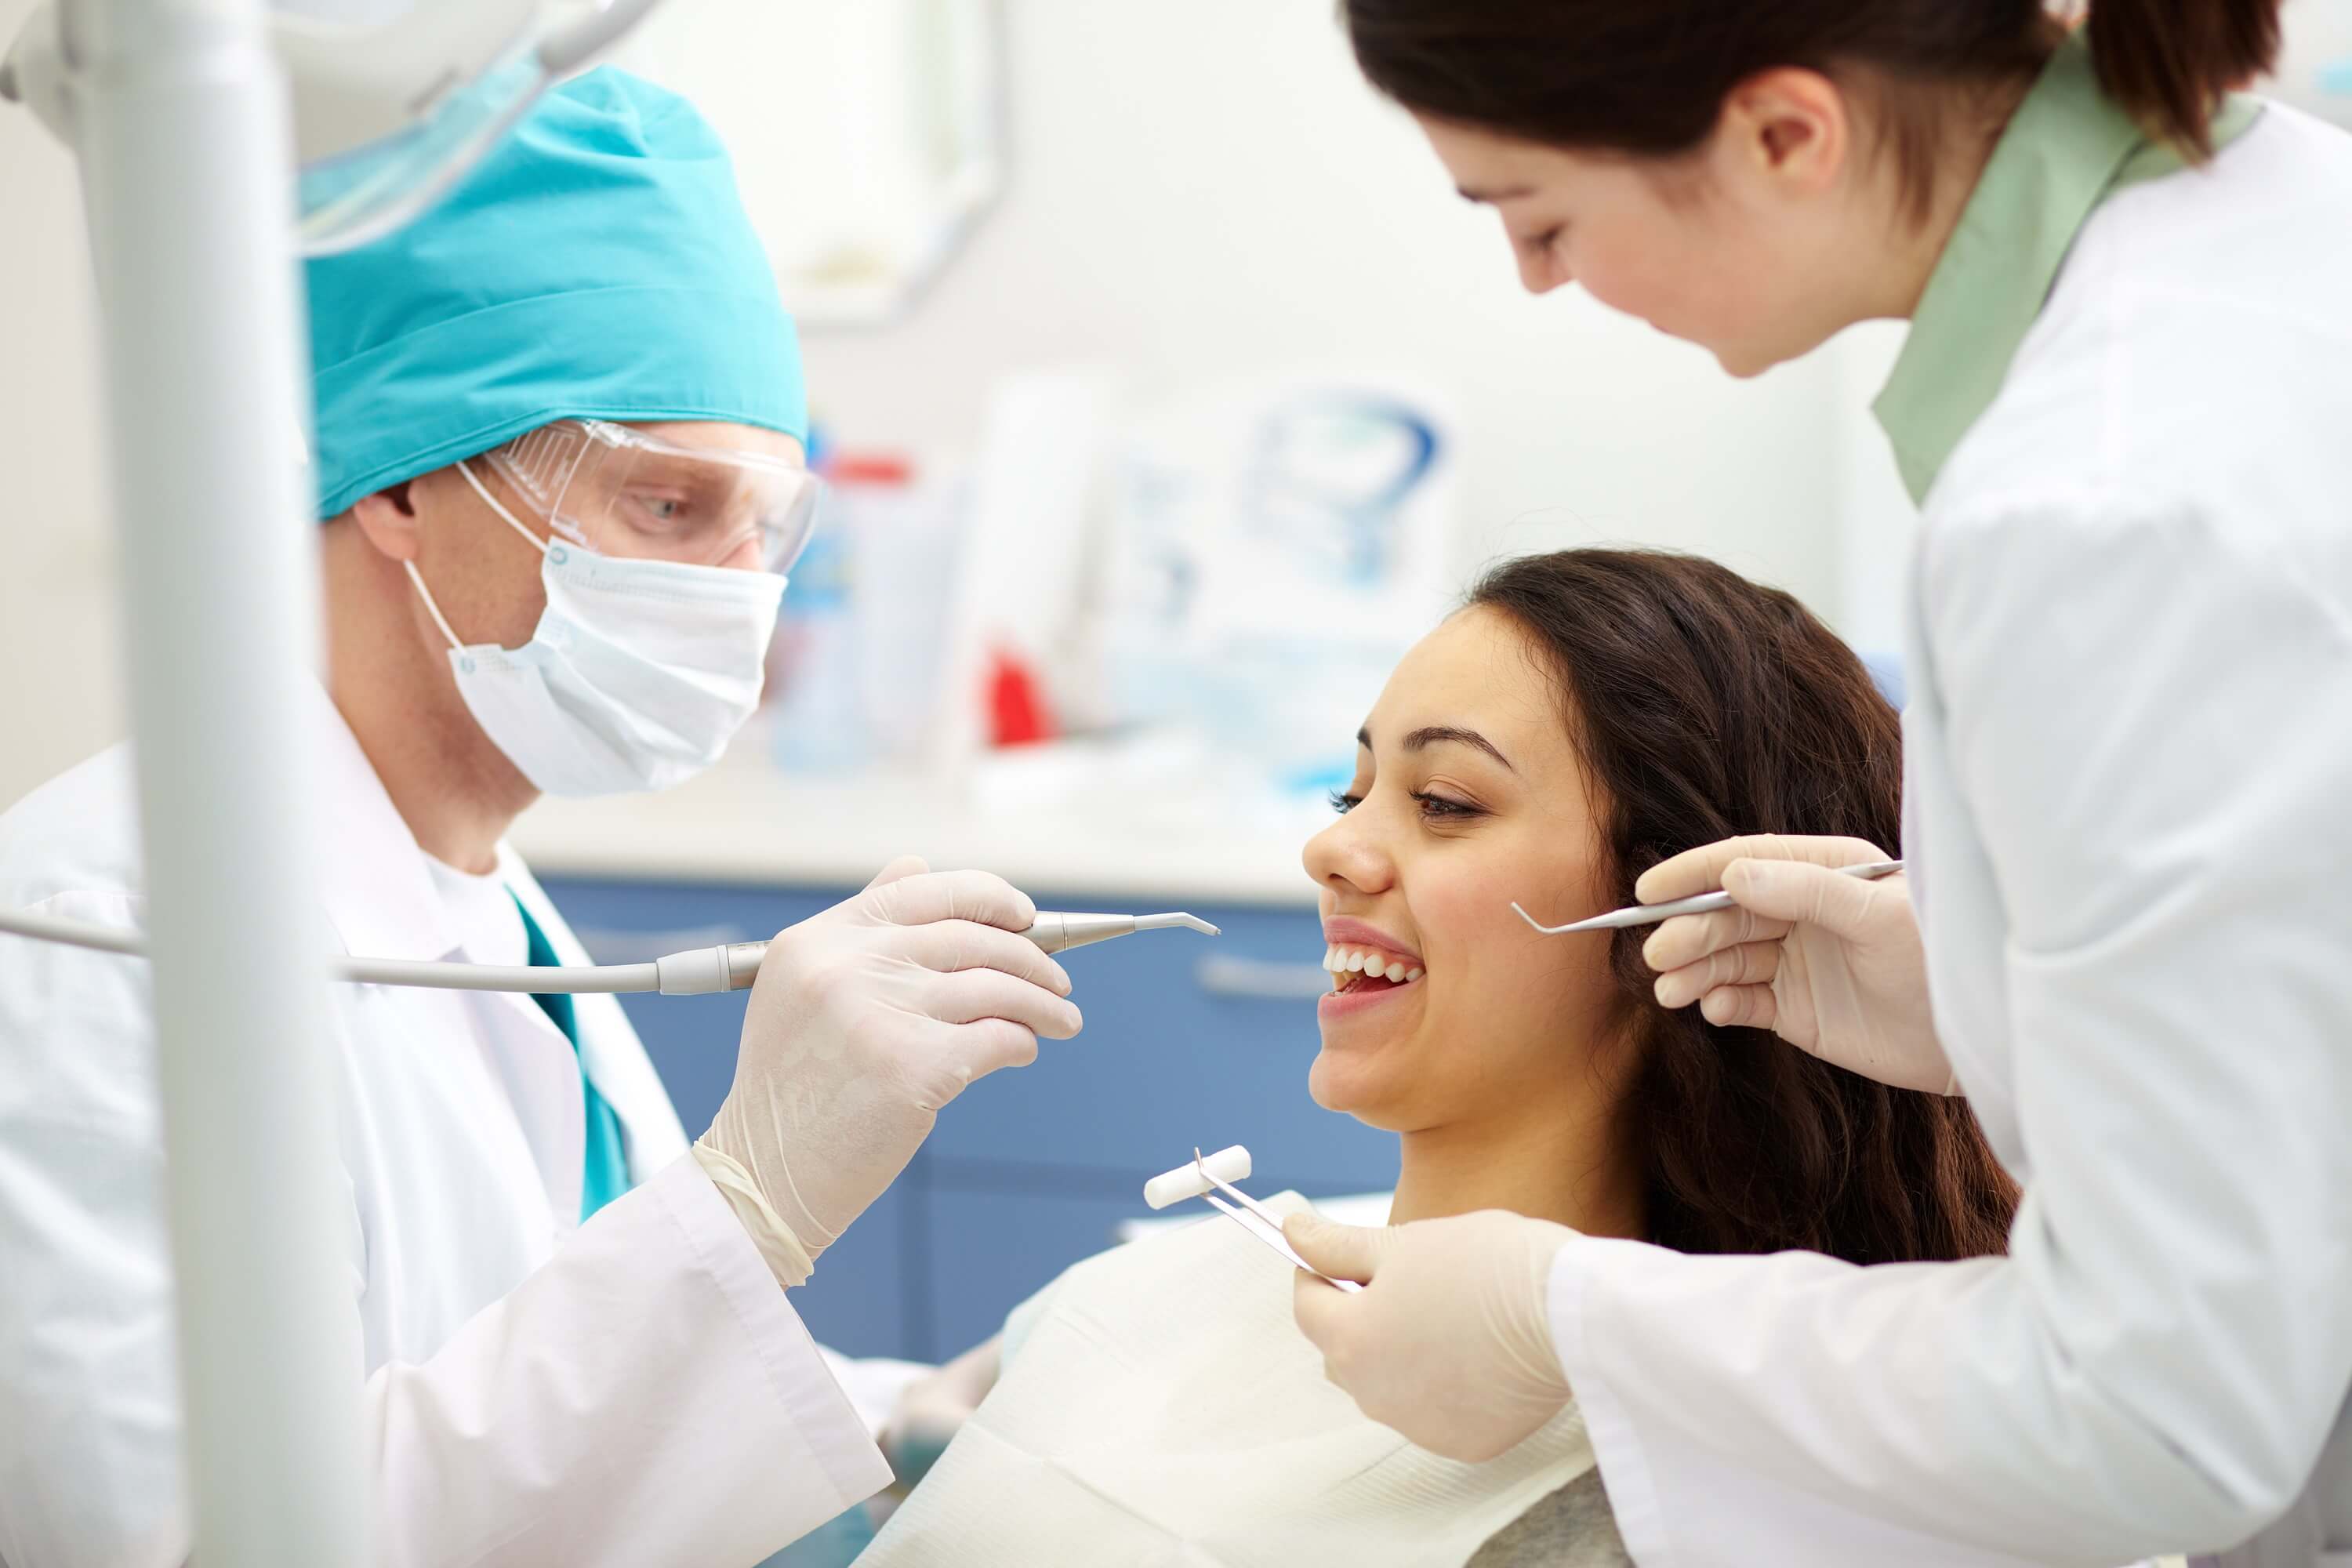 dentist-examining-patient-s-teeth (1)